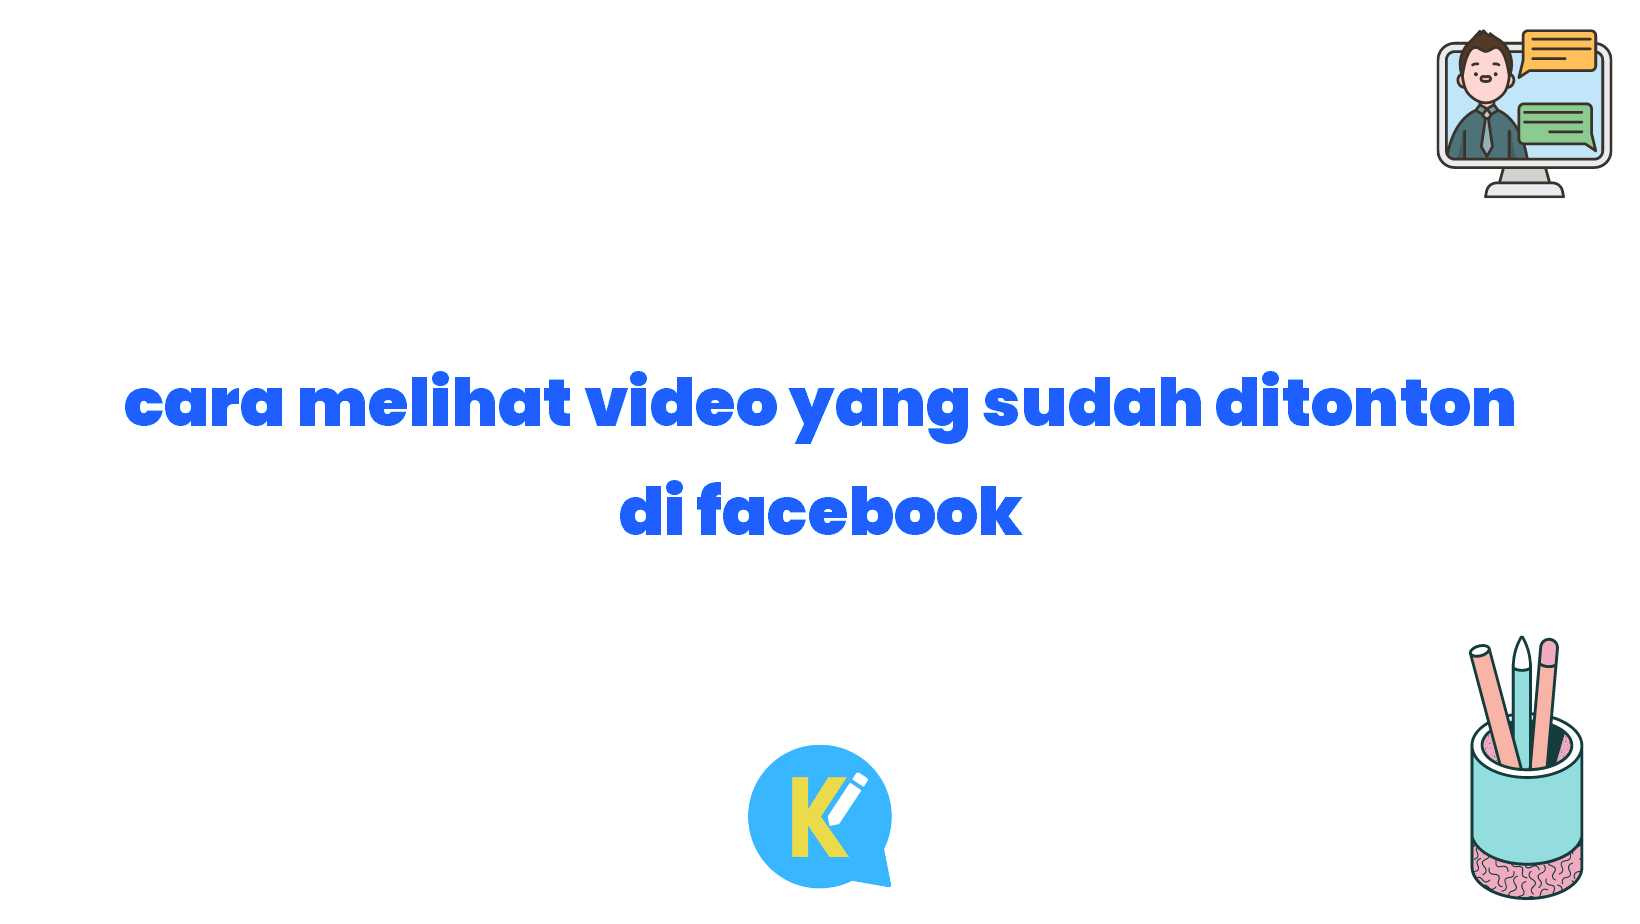 cara melihat video yang sudah ditonton di facebook